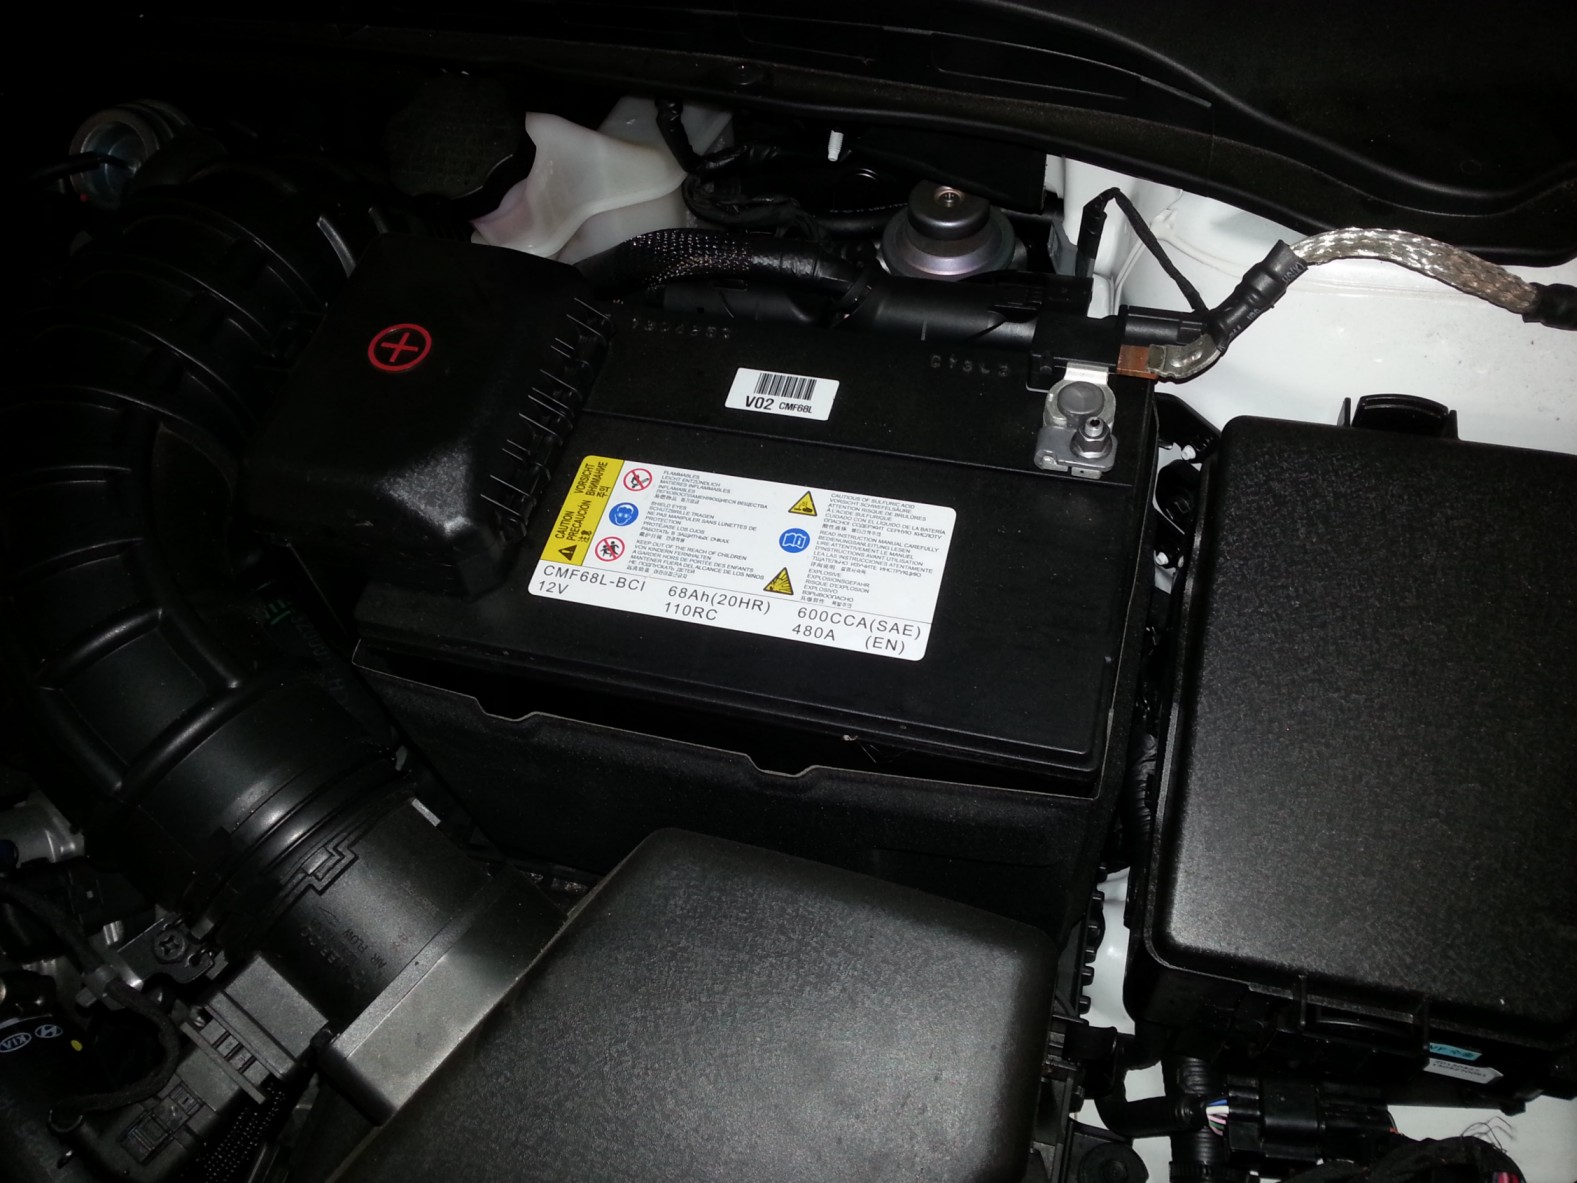 Batterie beim Diesel - Hyundai i40 - Hyundai Forum - HyundaiBoard.de